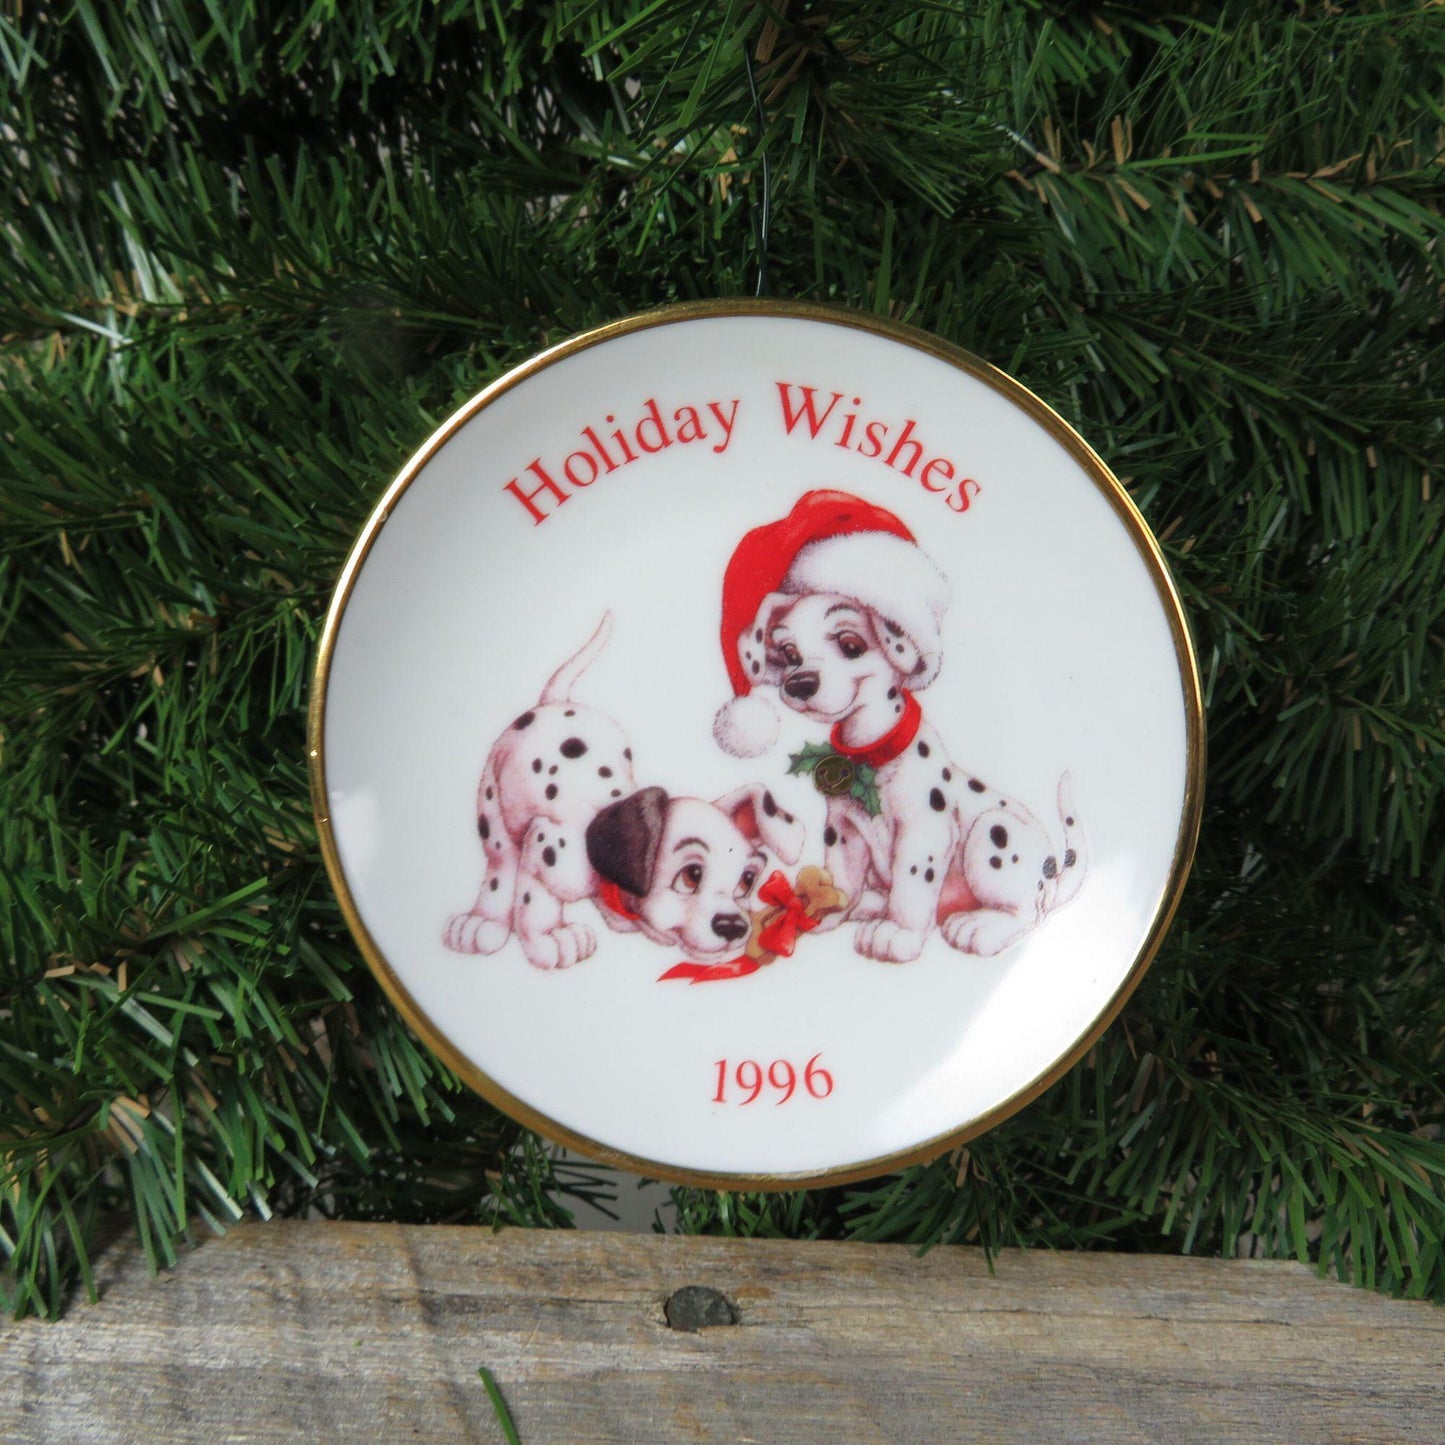 Vintage Dog Mini Plate Ornament 101 Dalmatians Holiday Wishes Hallmark Disney 1996